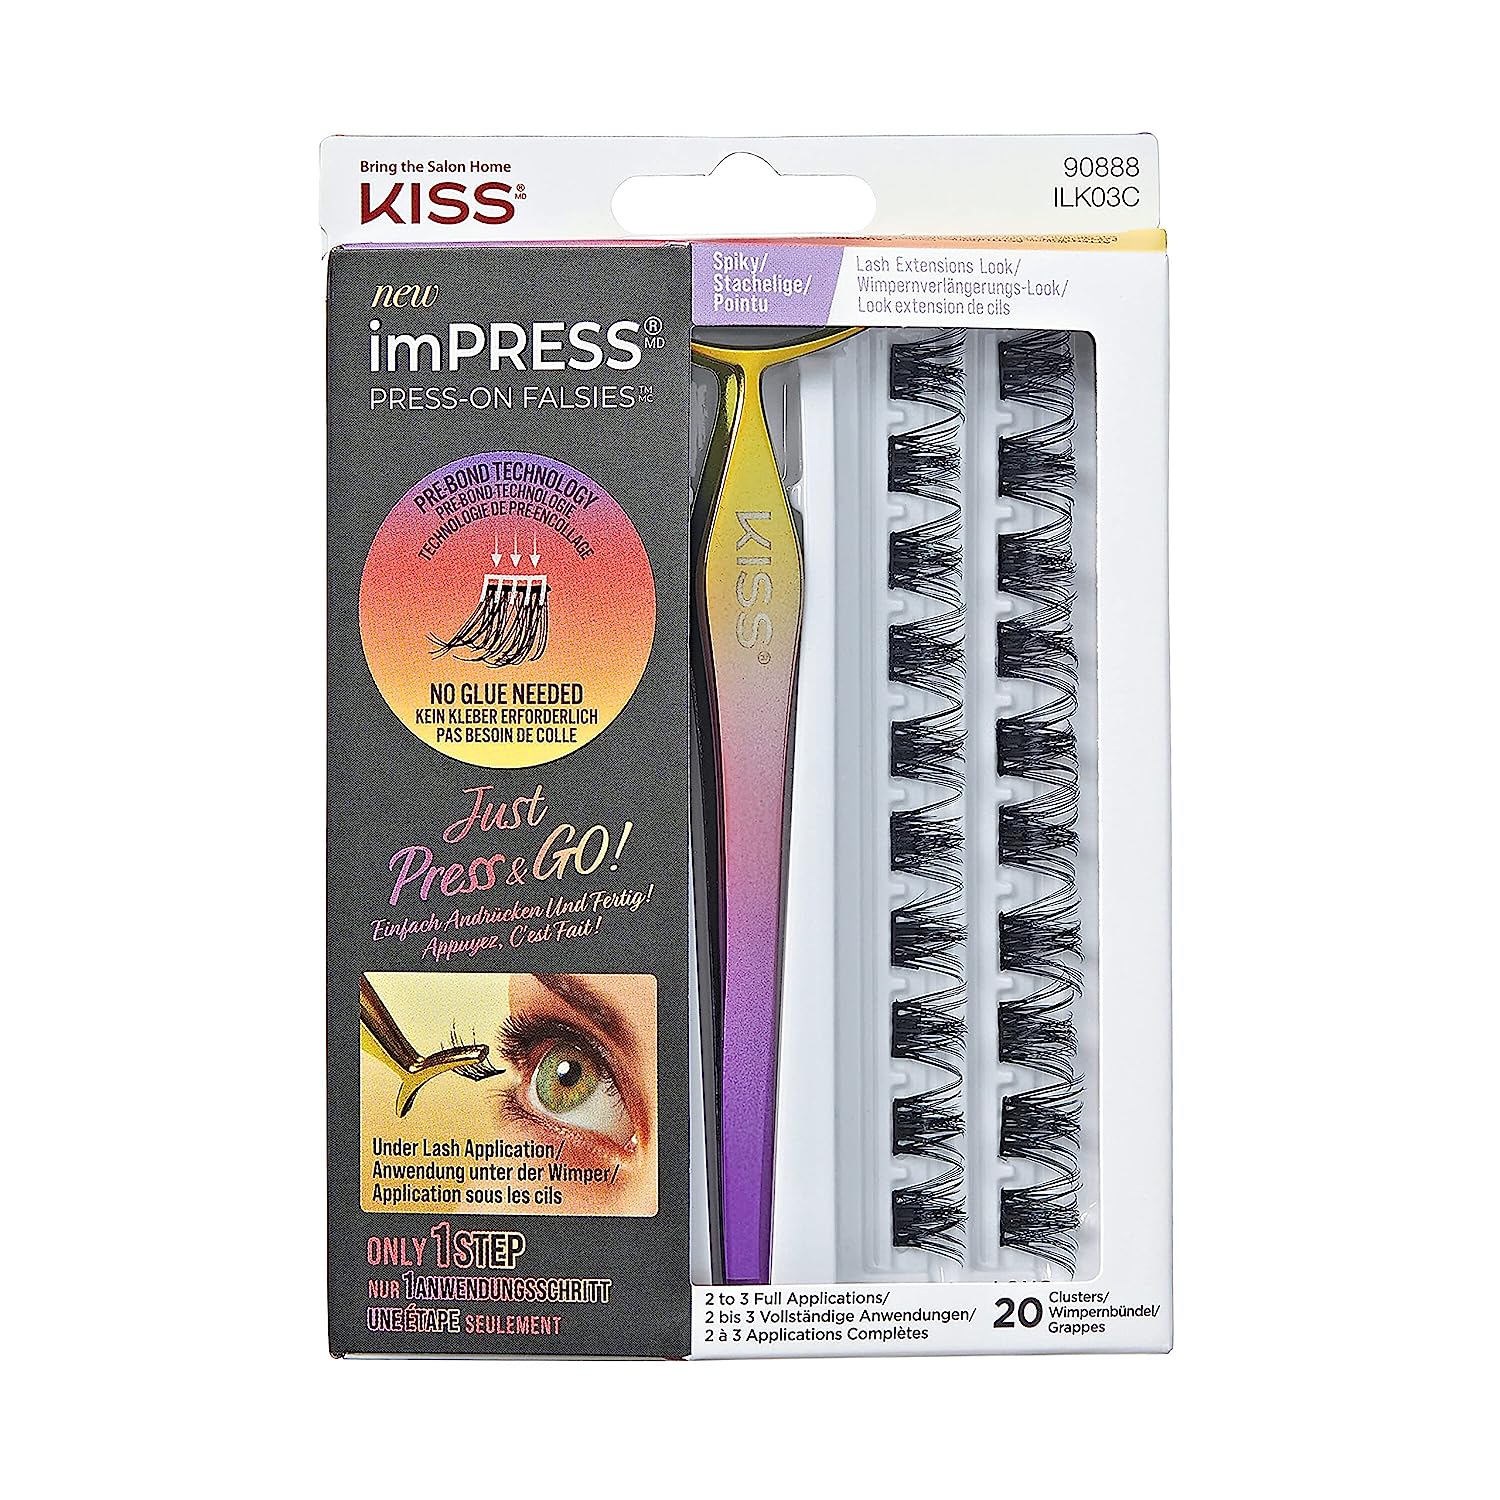 KISS IMPRESS PRESS-ON FALSIES, Self-Adhesive Eyelashes, No Glue, Artificial Lash Cluster, Spiky, 20 Cluster + Applicator